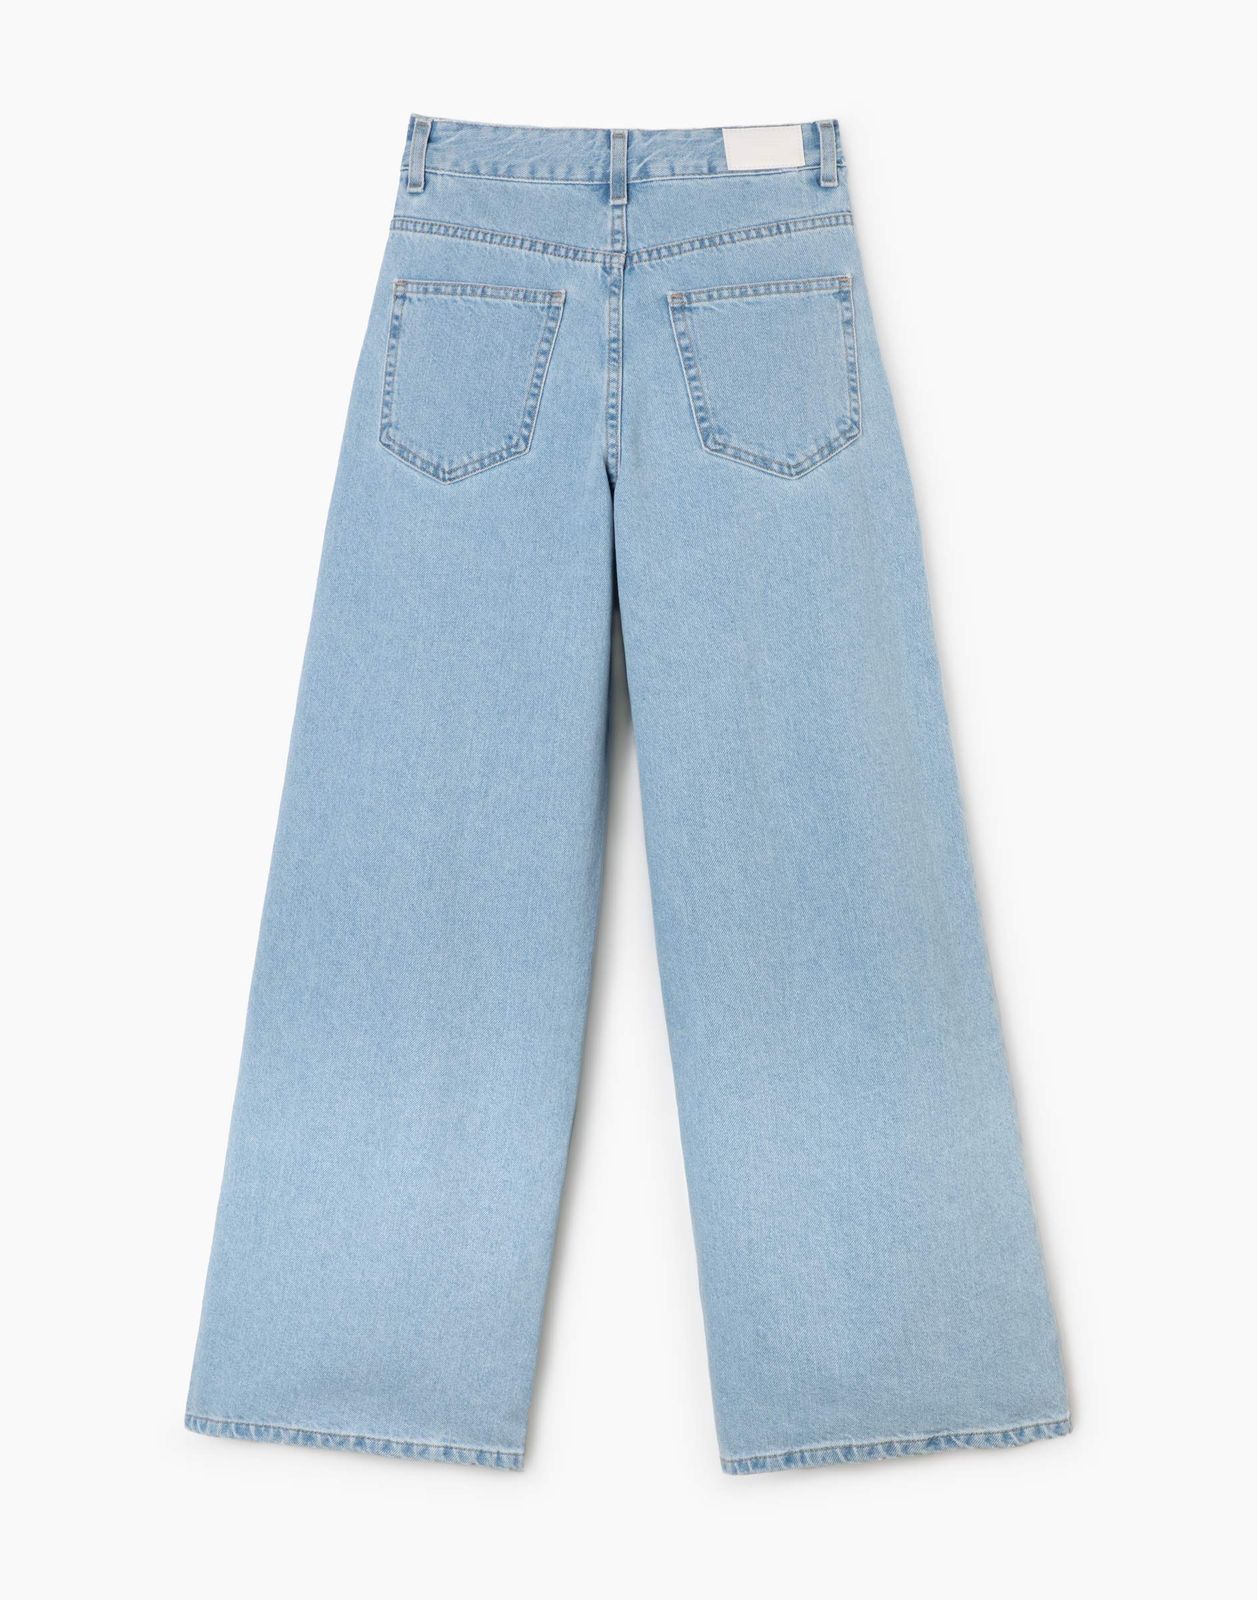 Джинсы Gloria Jeans GJN031761 синий/лайт/ 14+/164 (42) джинсы для девочек gloria jeans gjn029461 медиум лайт 13 14л 164 41